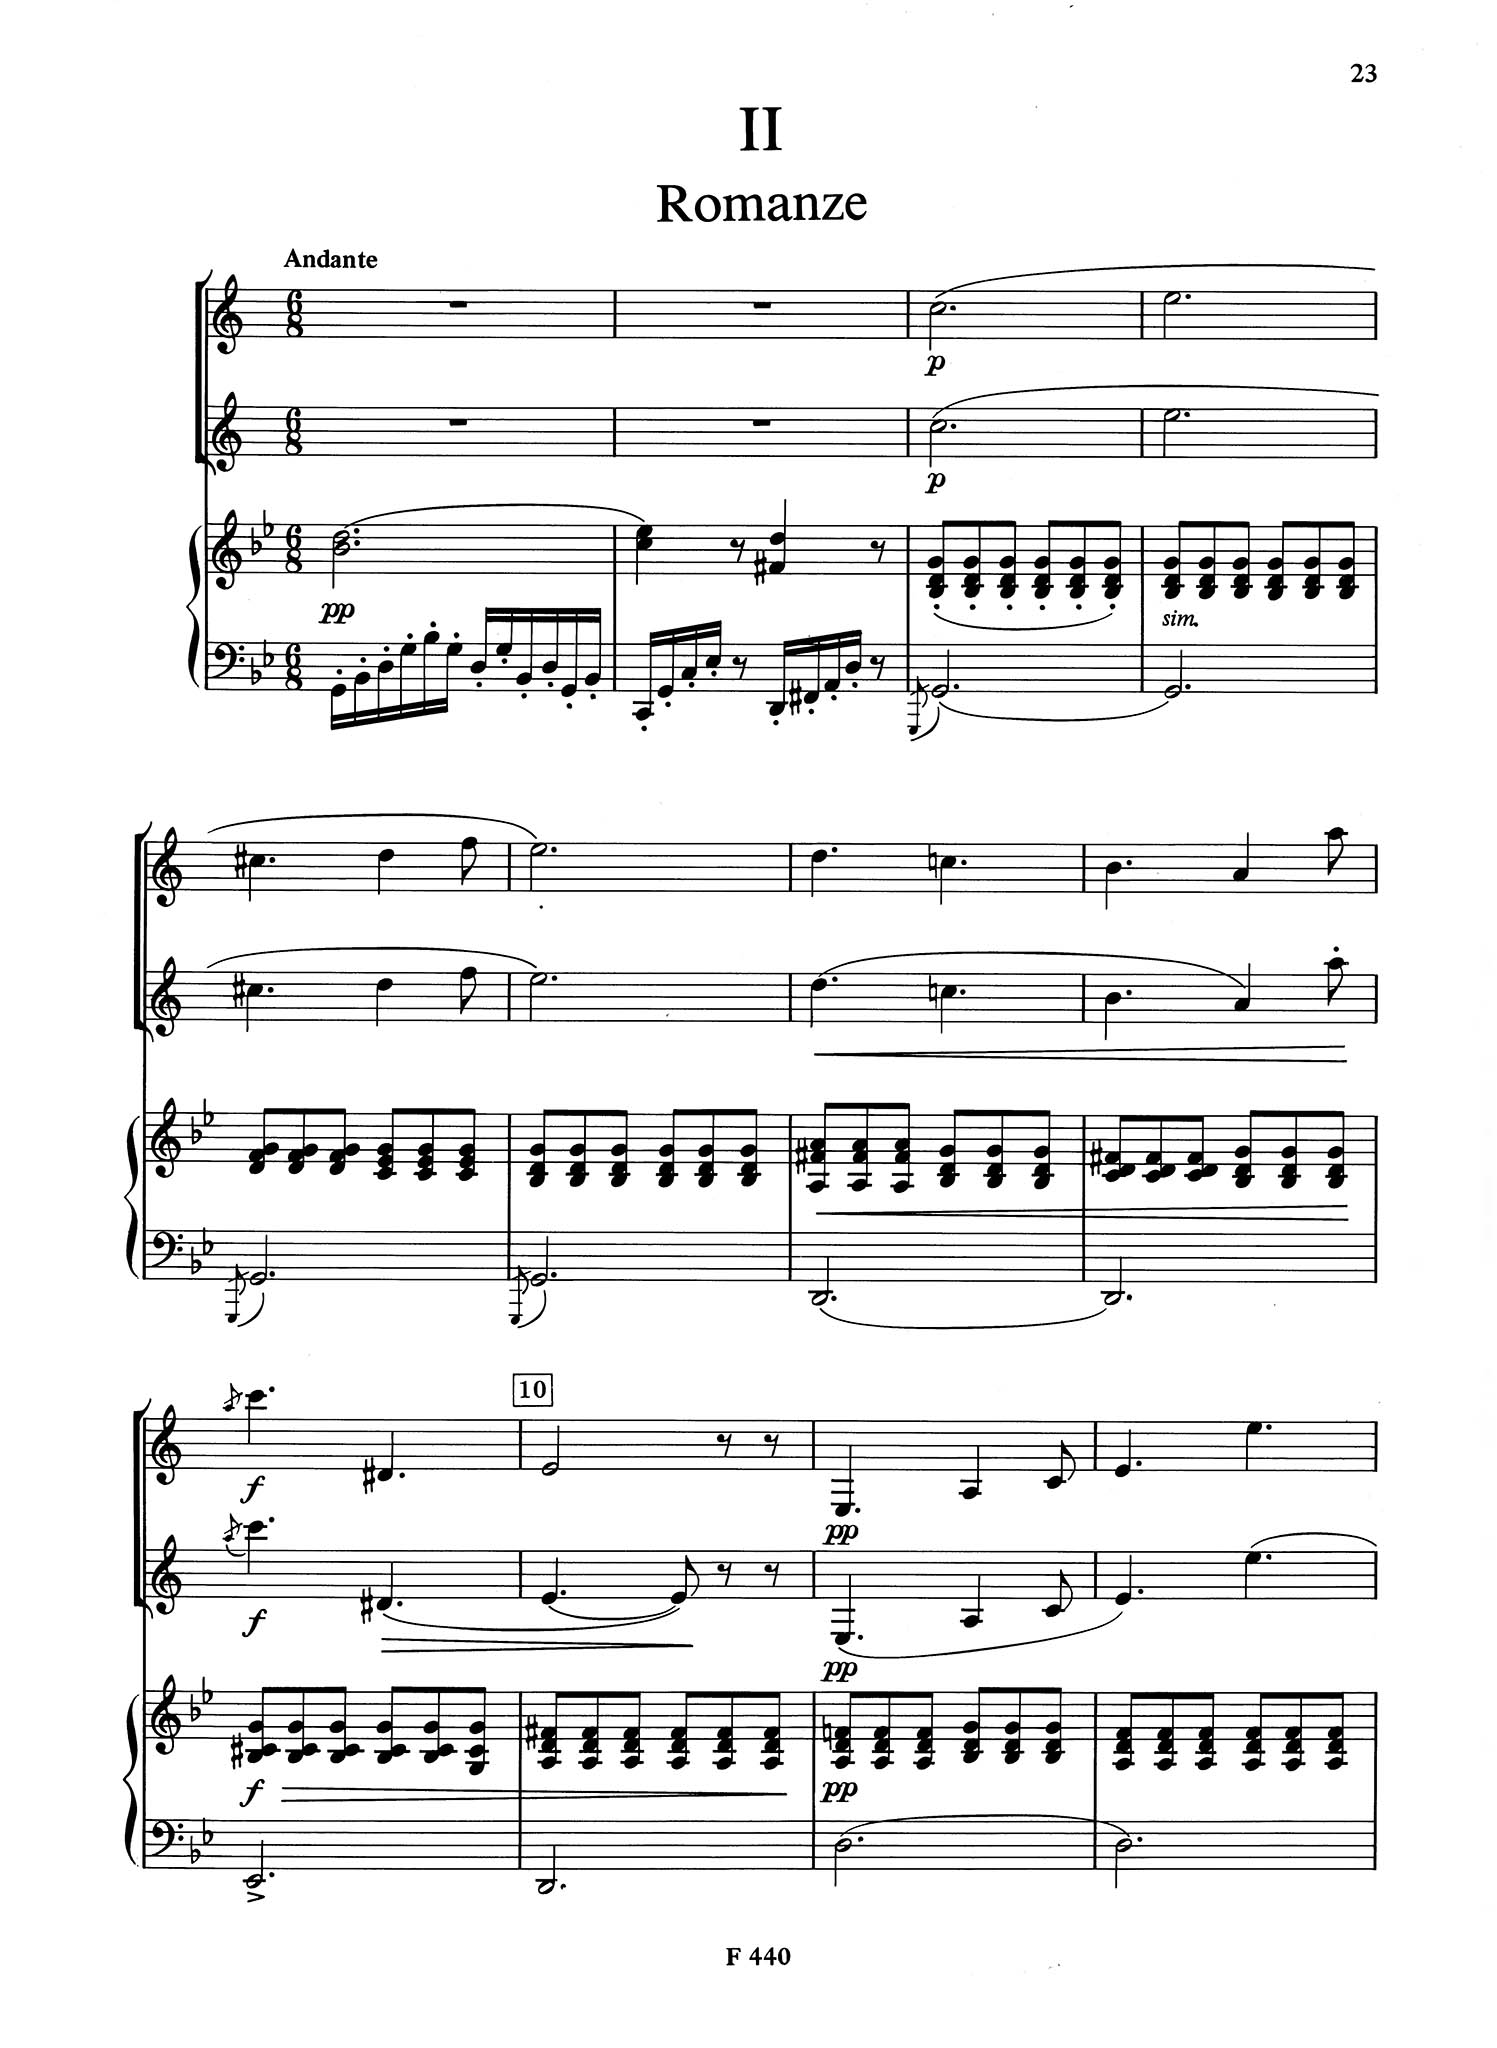 Clarinet Concerto No. 2 in E-flat Major, Op. 74 - Movement 2